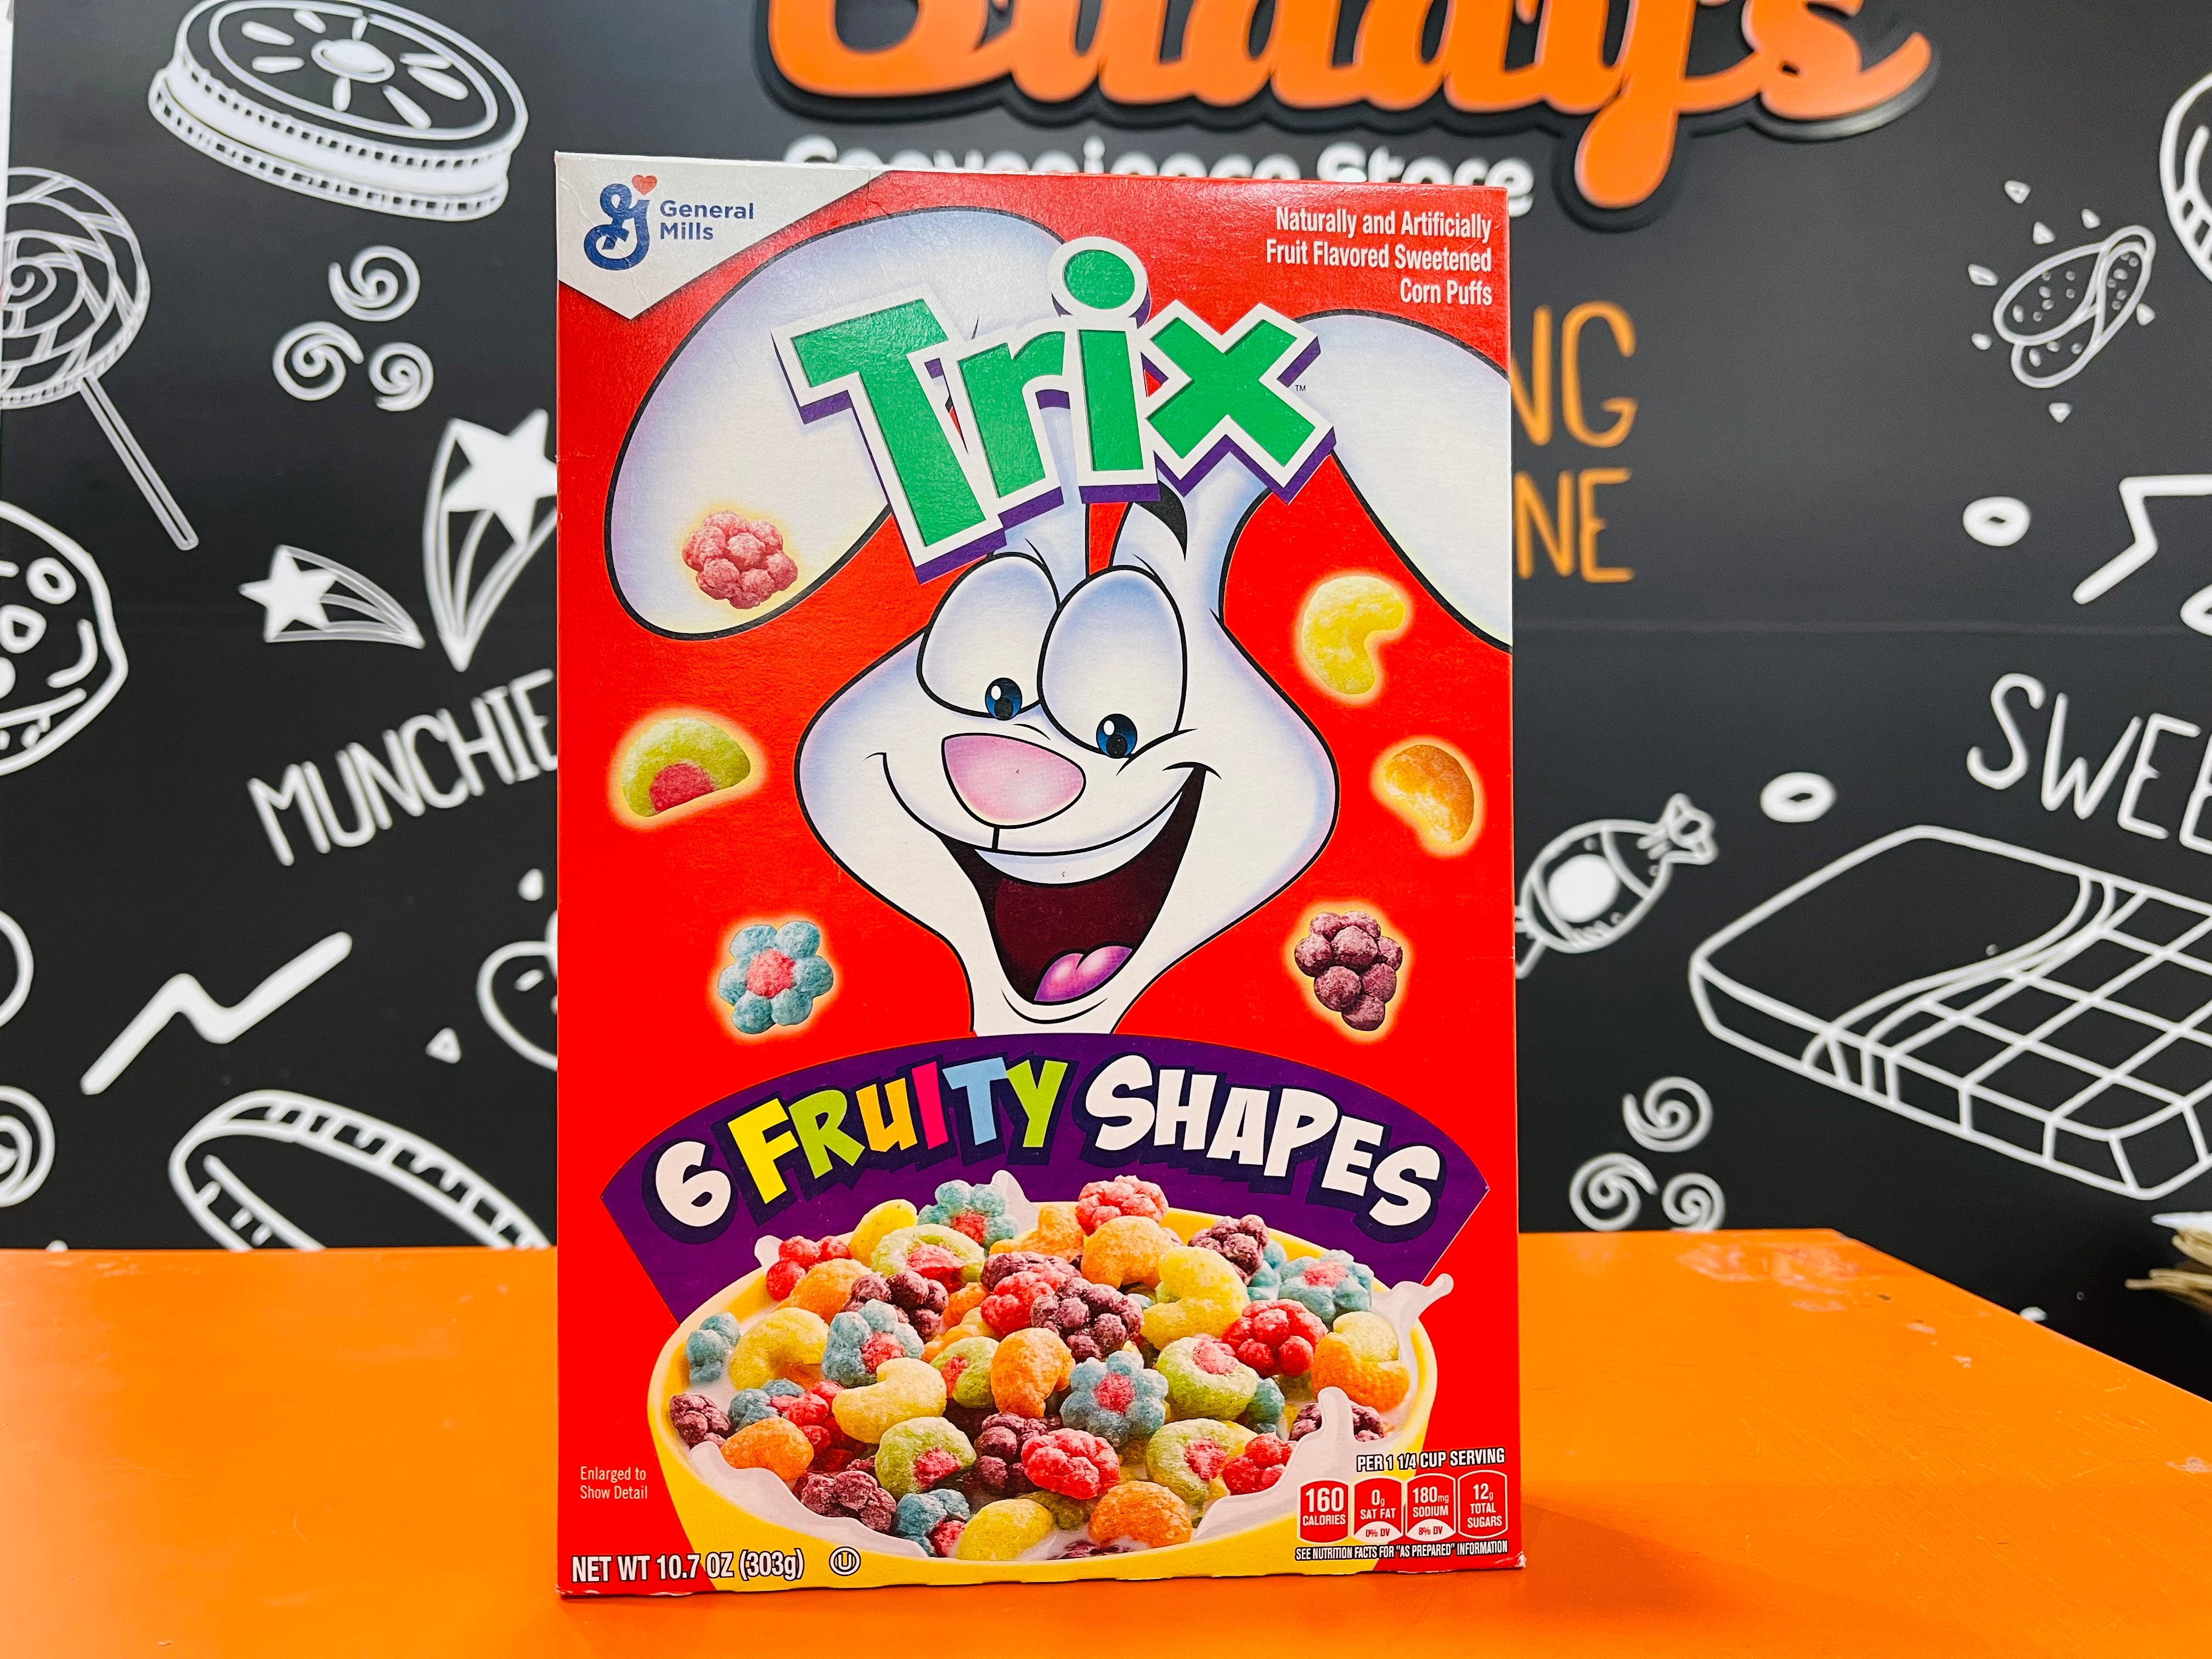 Trix 6 Fruity Shapes Cereal